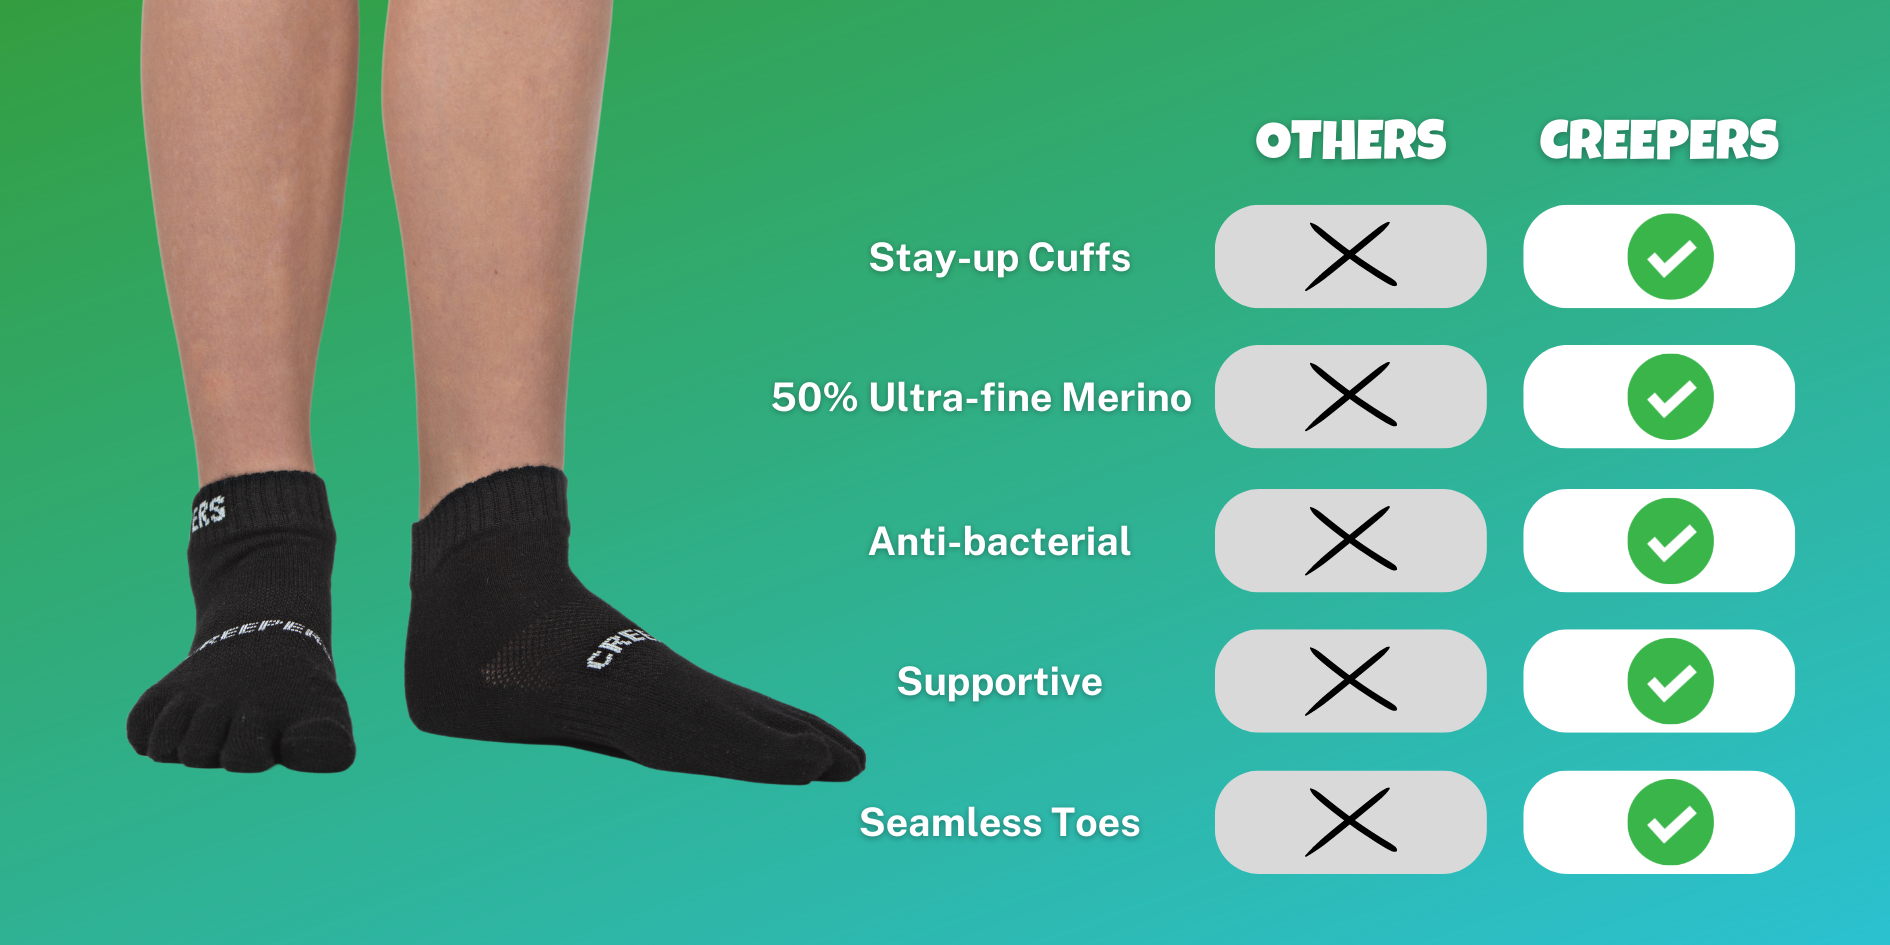 Creepers toe socks vs injinji socks comparison